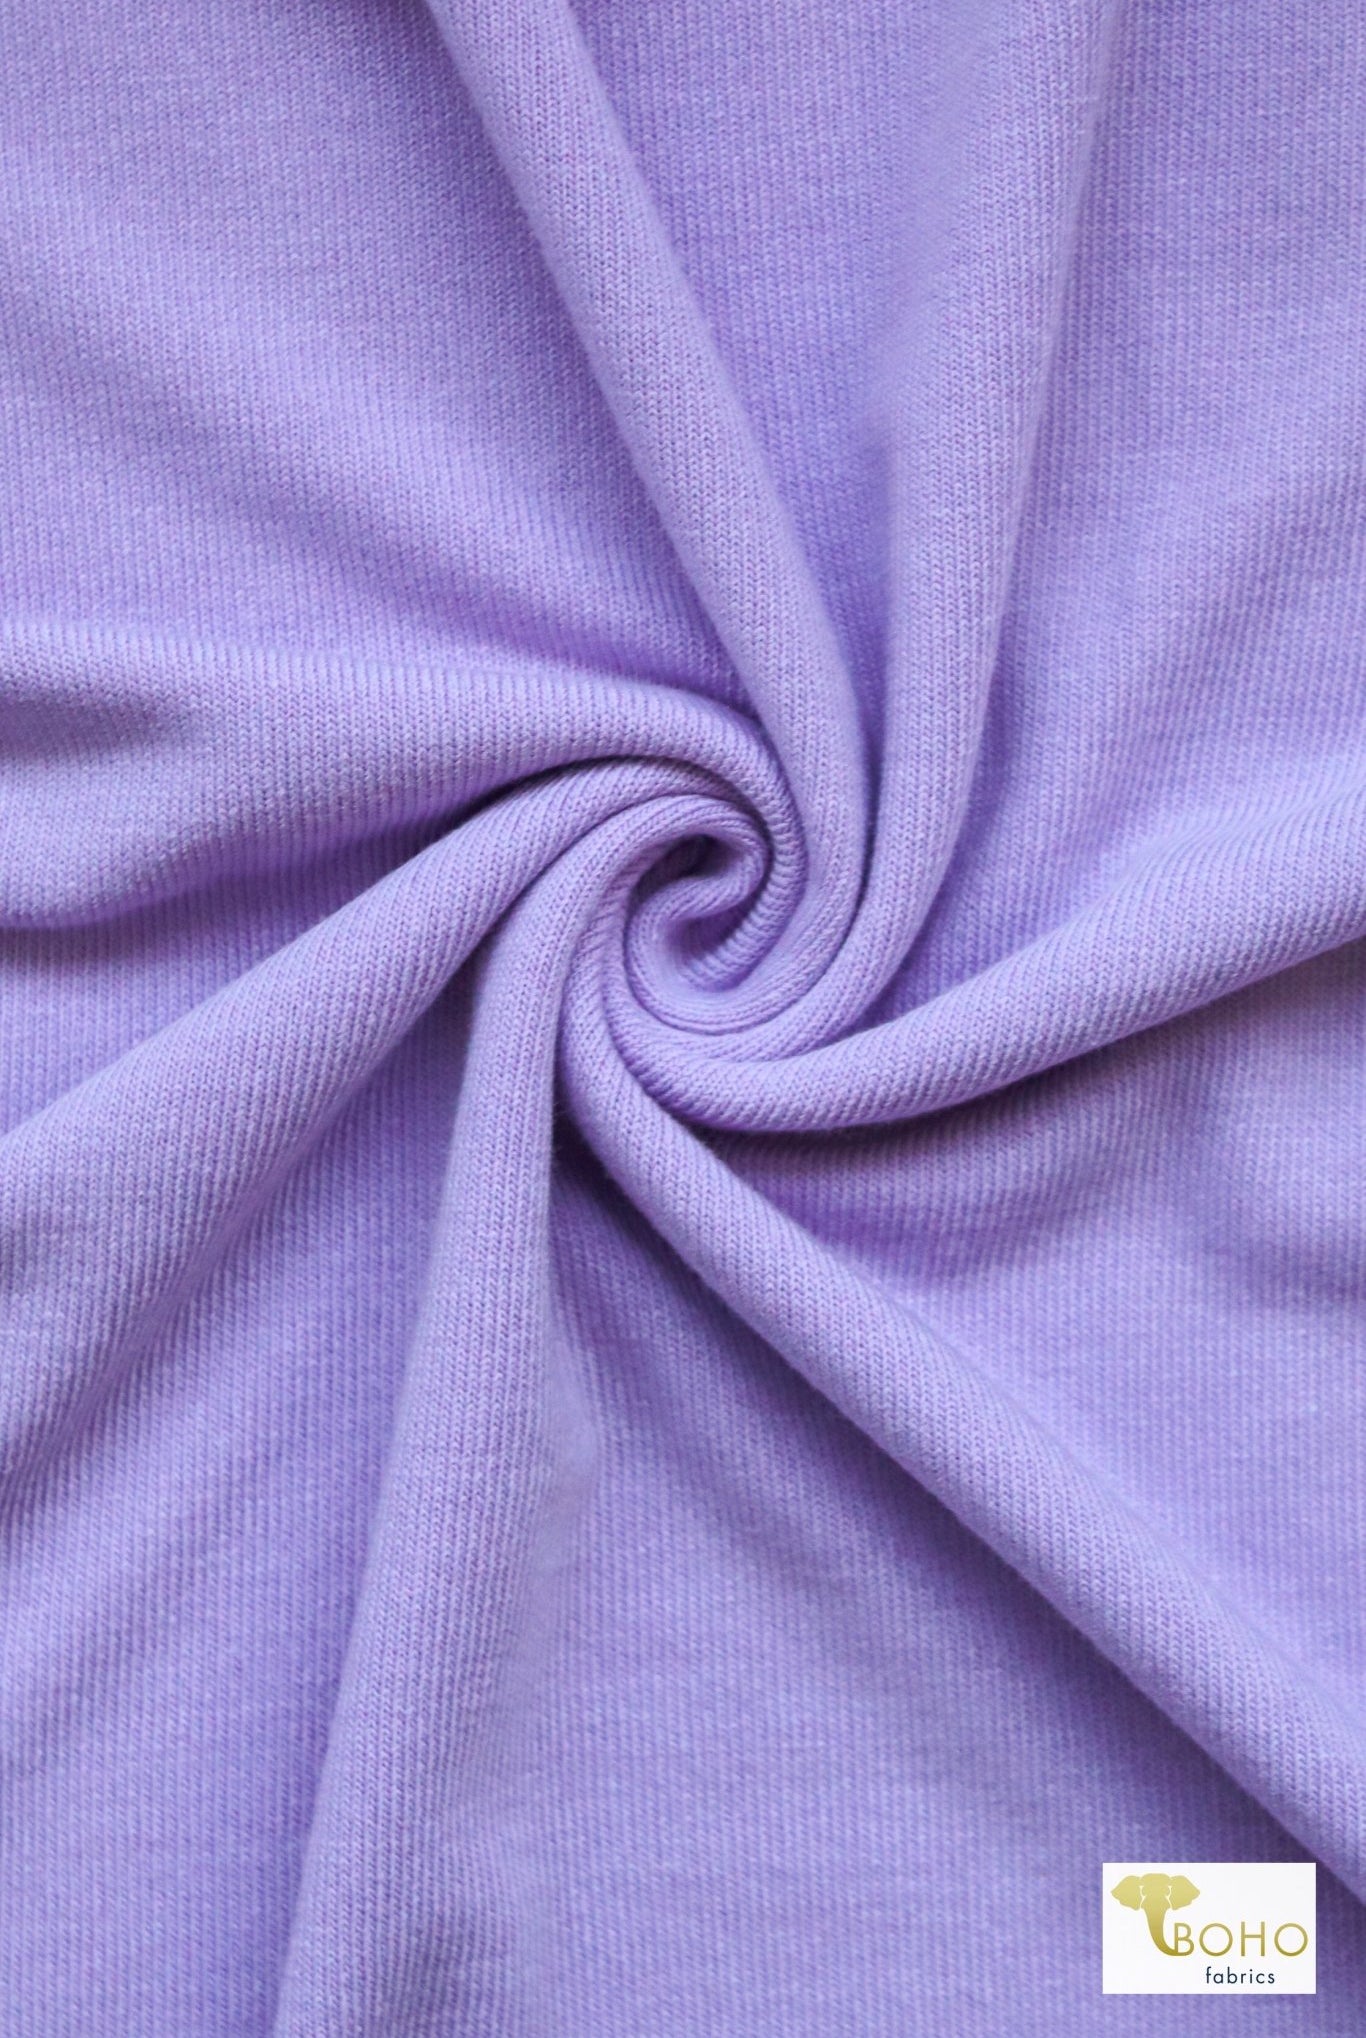 Lavender Purple, Sweater Knit - Boho Fabrics